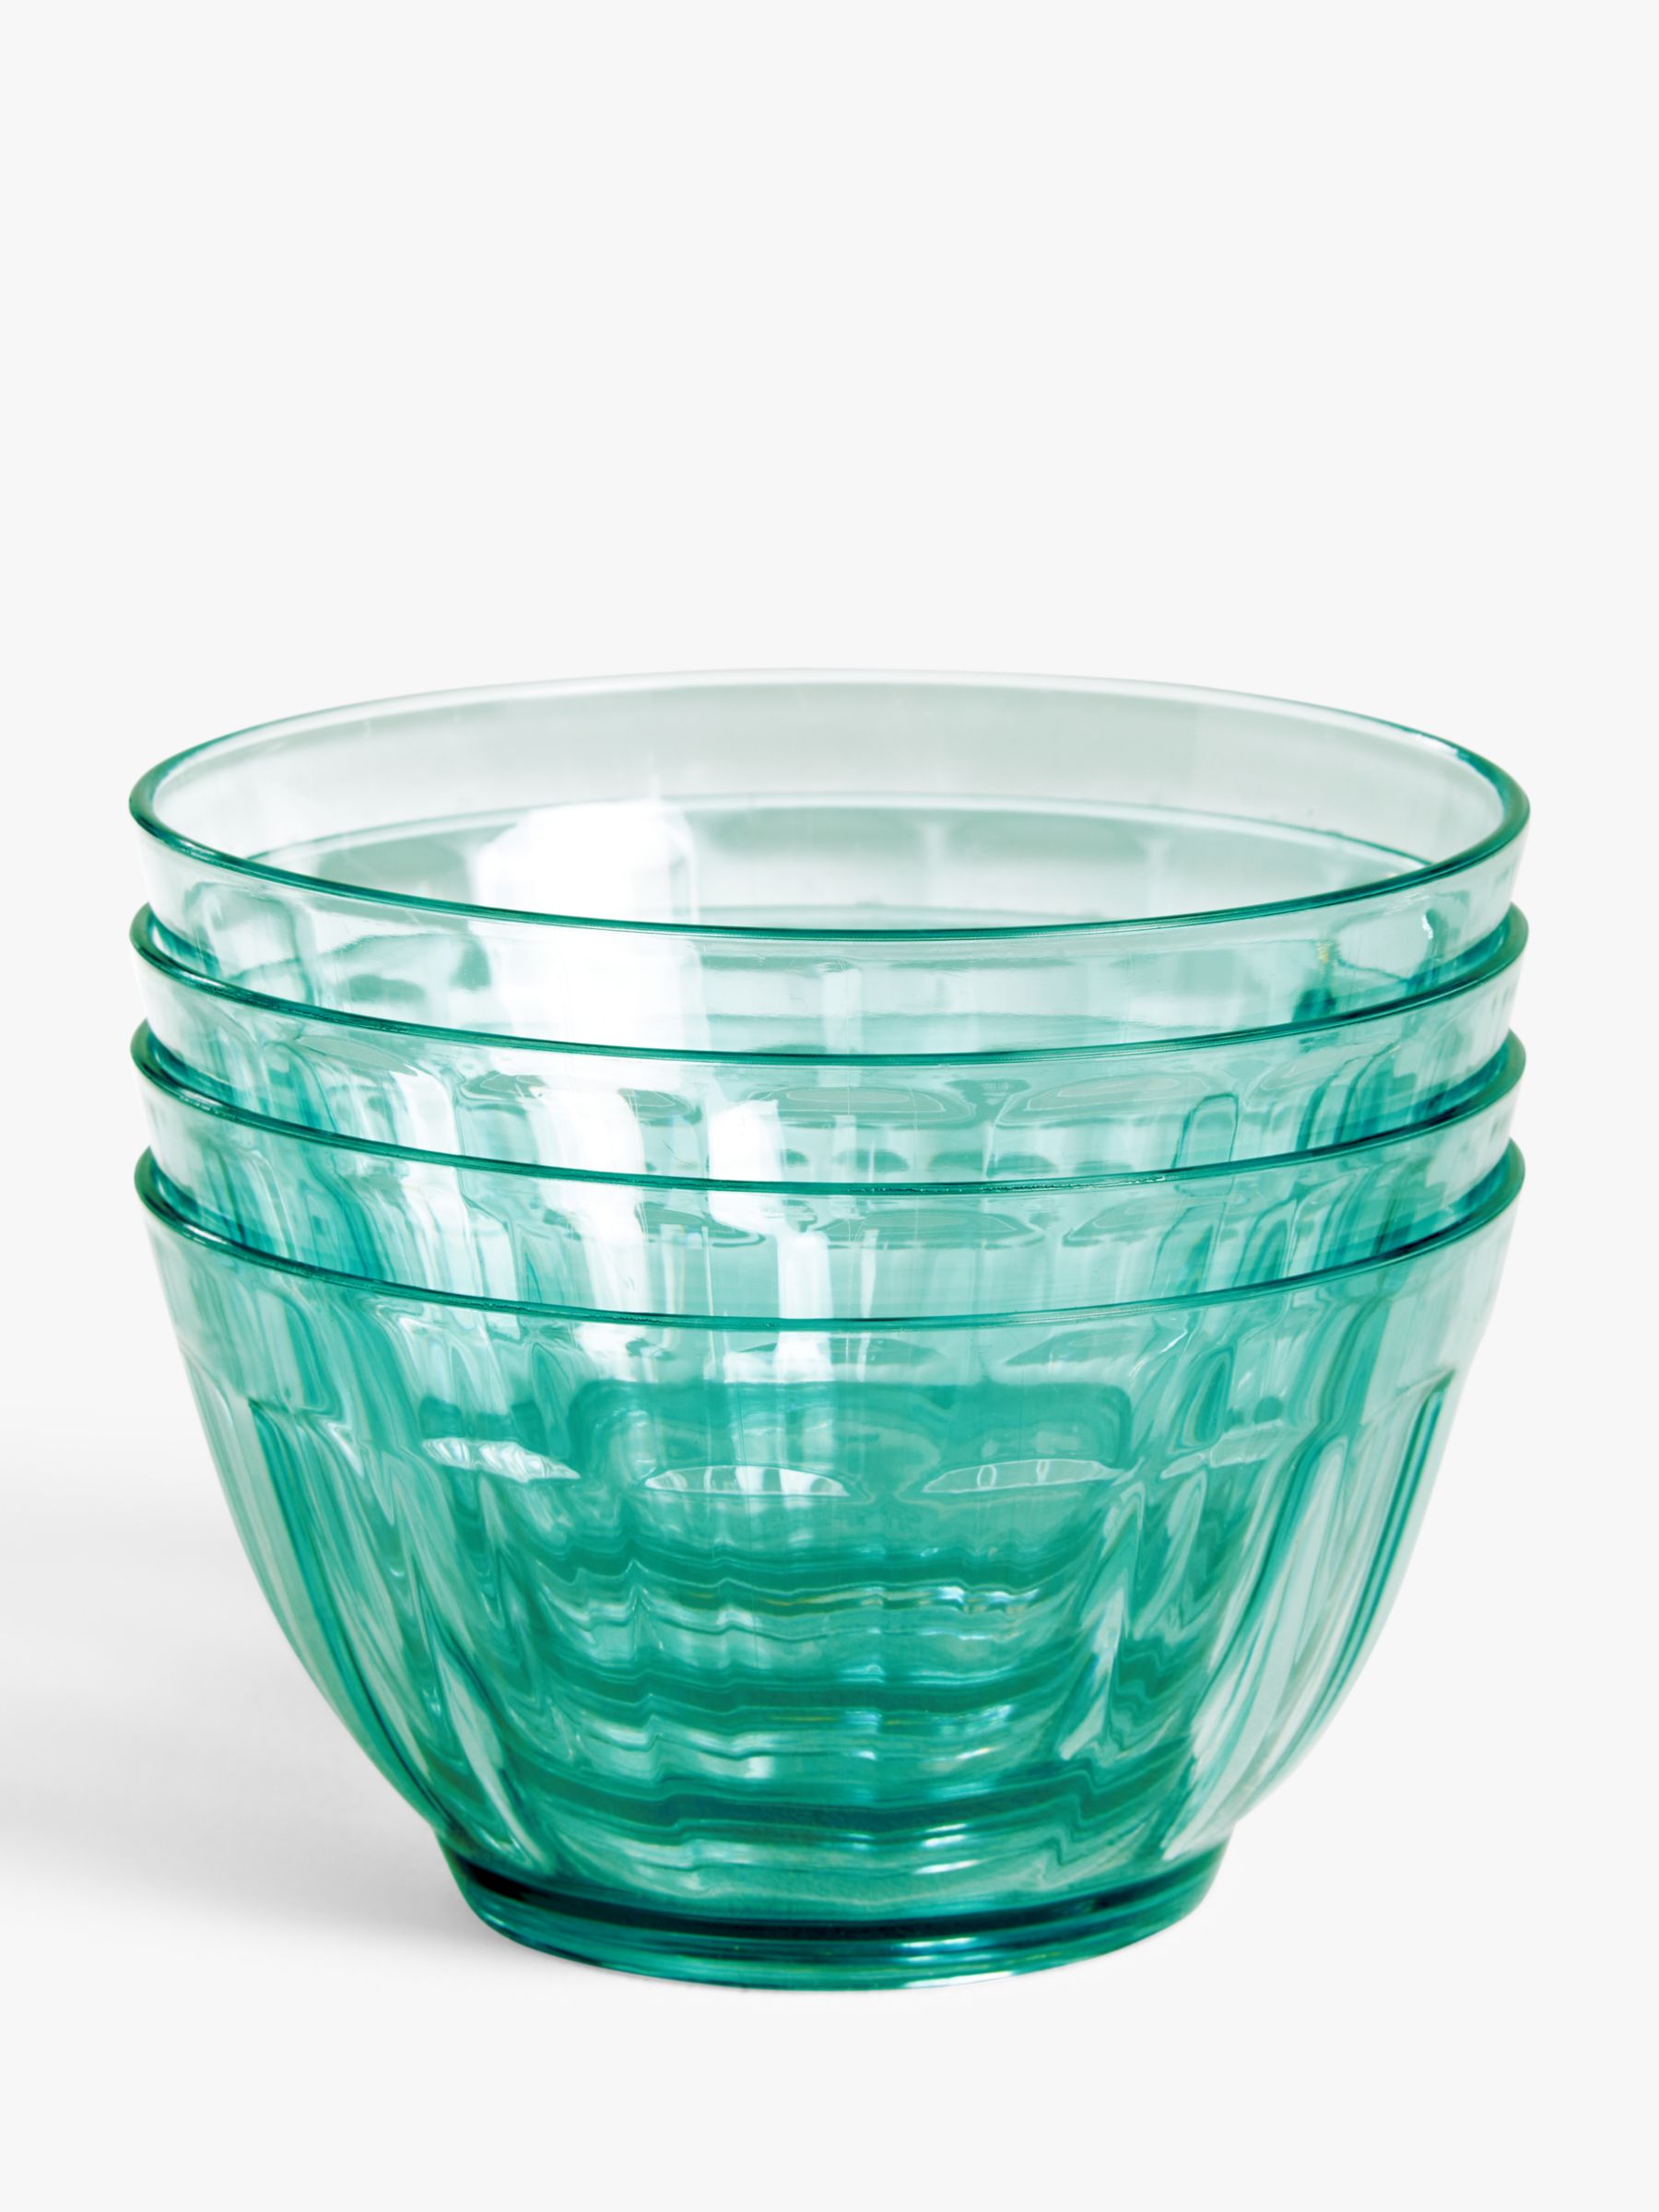 ANYDAY John Lewis & Partners Plastic Picnic Bowls, Set of 4, 14cm, Aqua